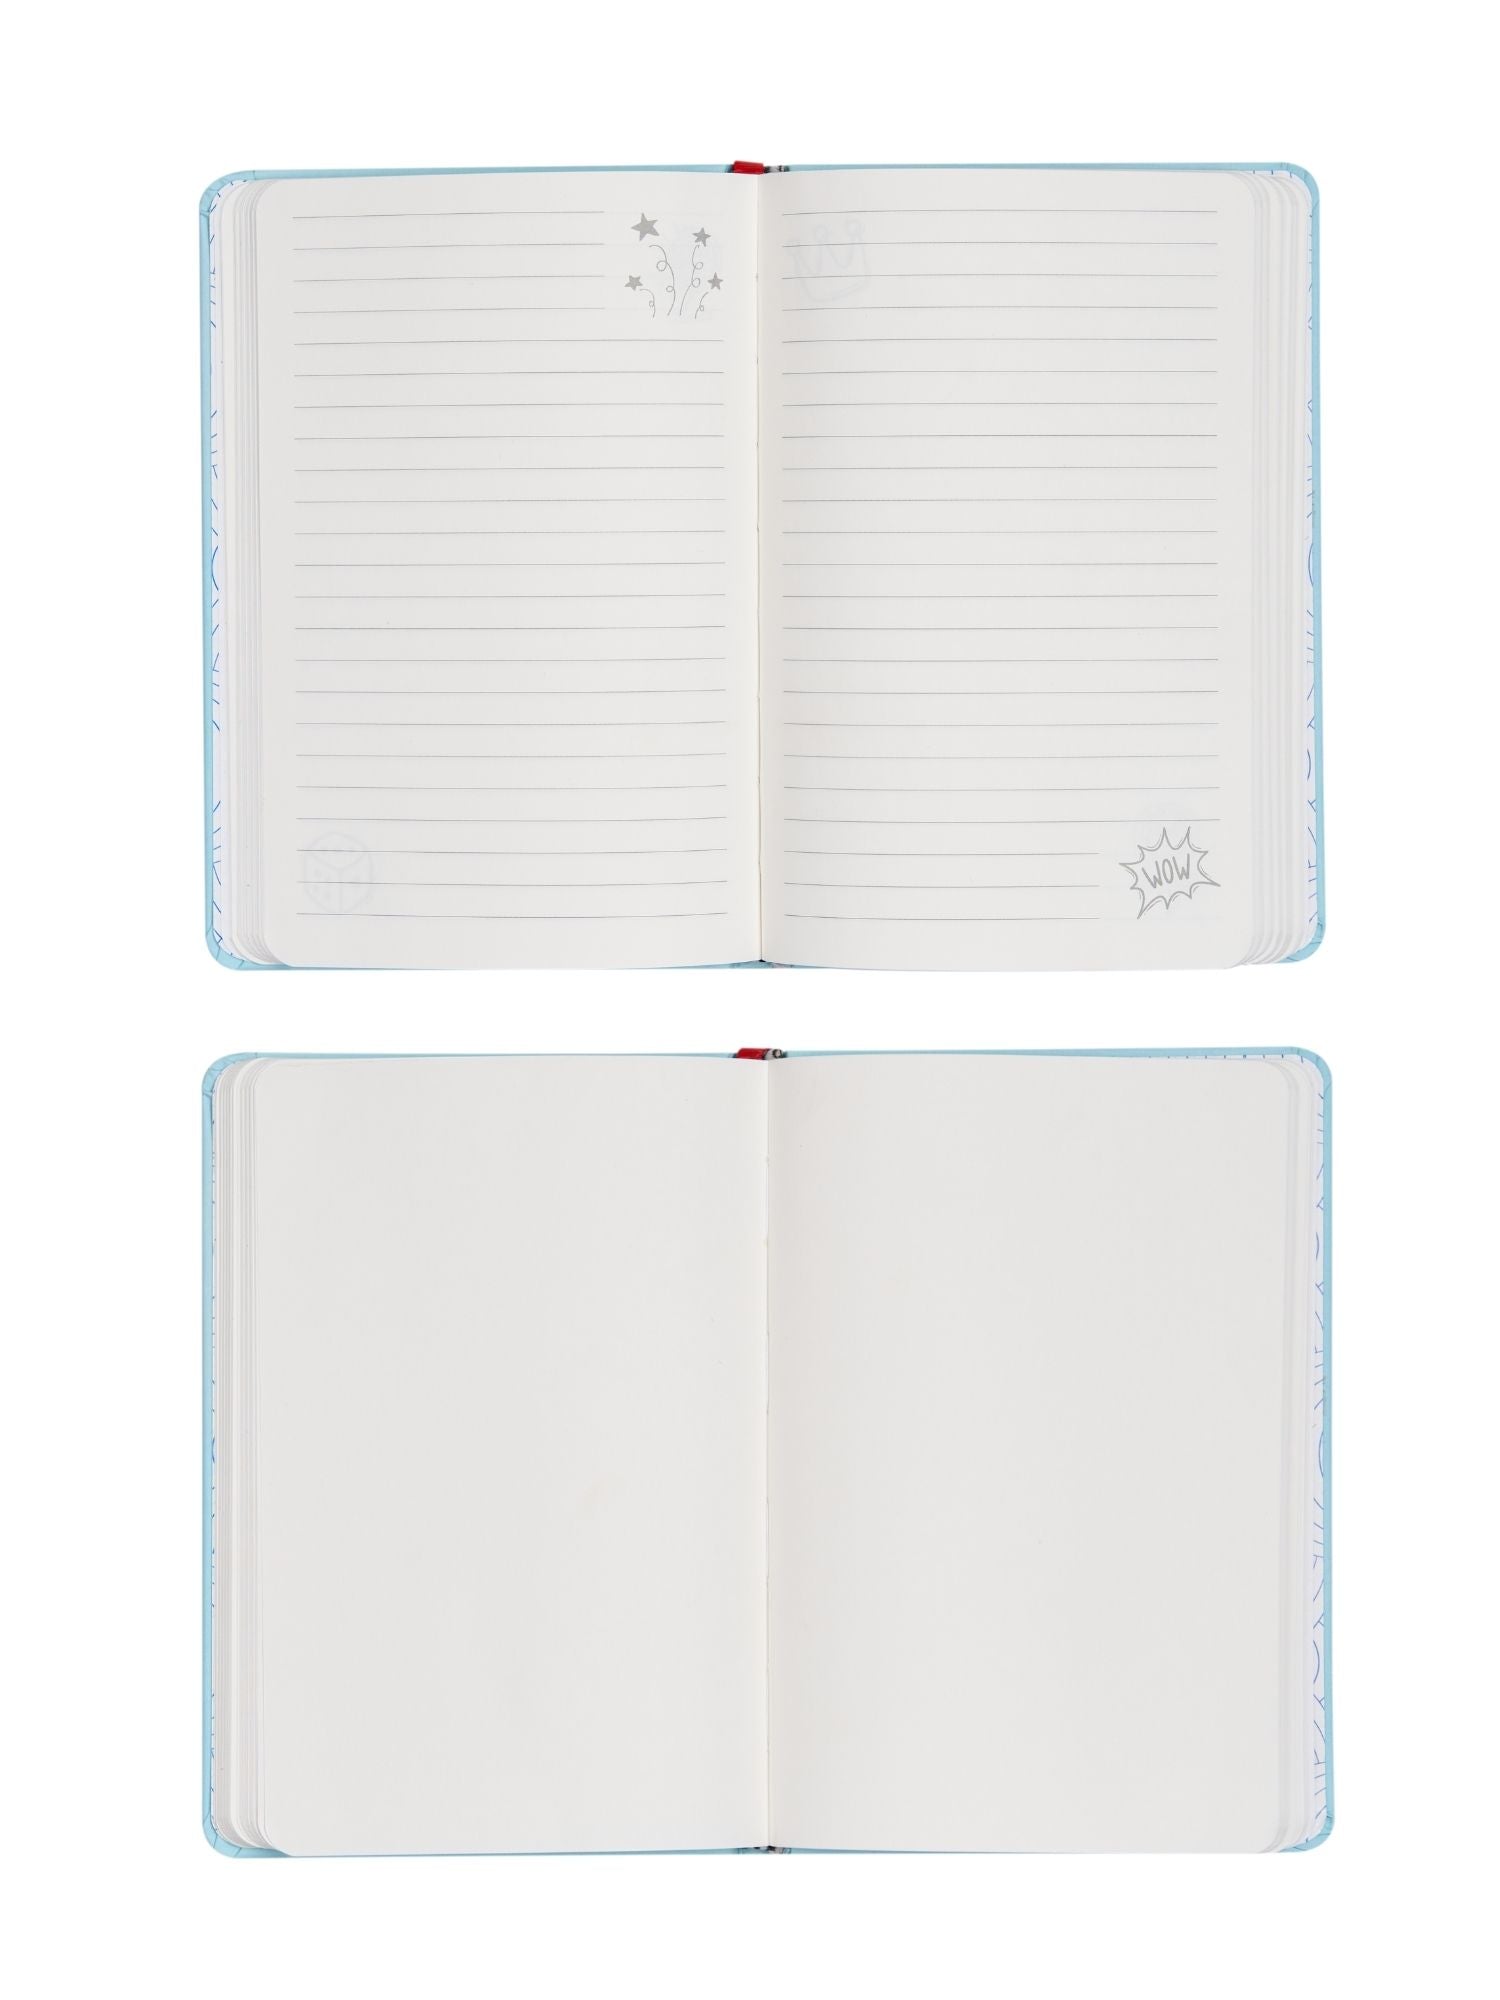 Doodle Initial C Stripes Theme Premium Hard Bound B6 Notebook Diary